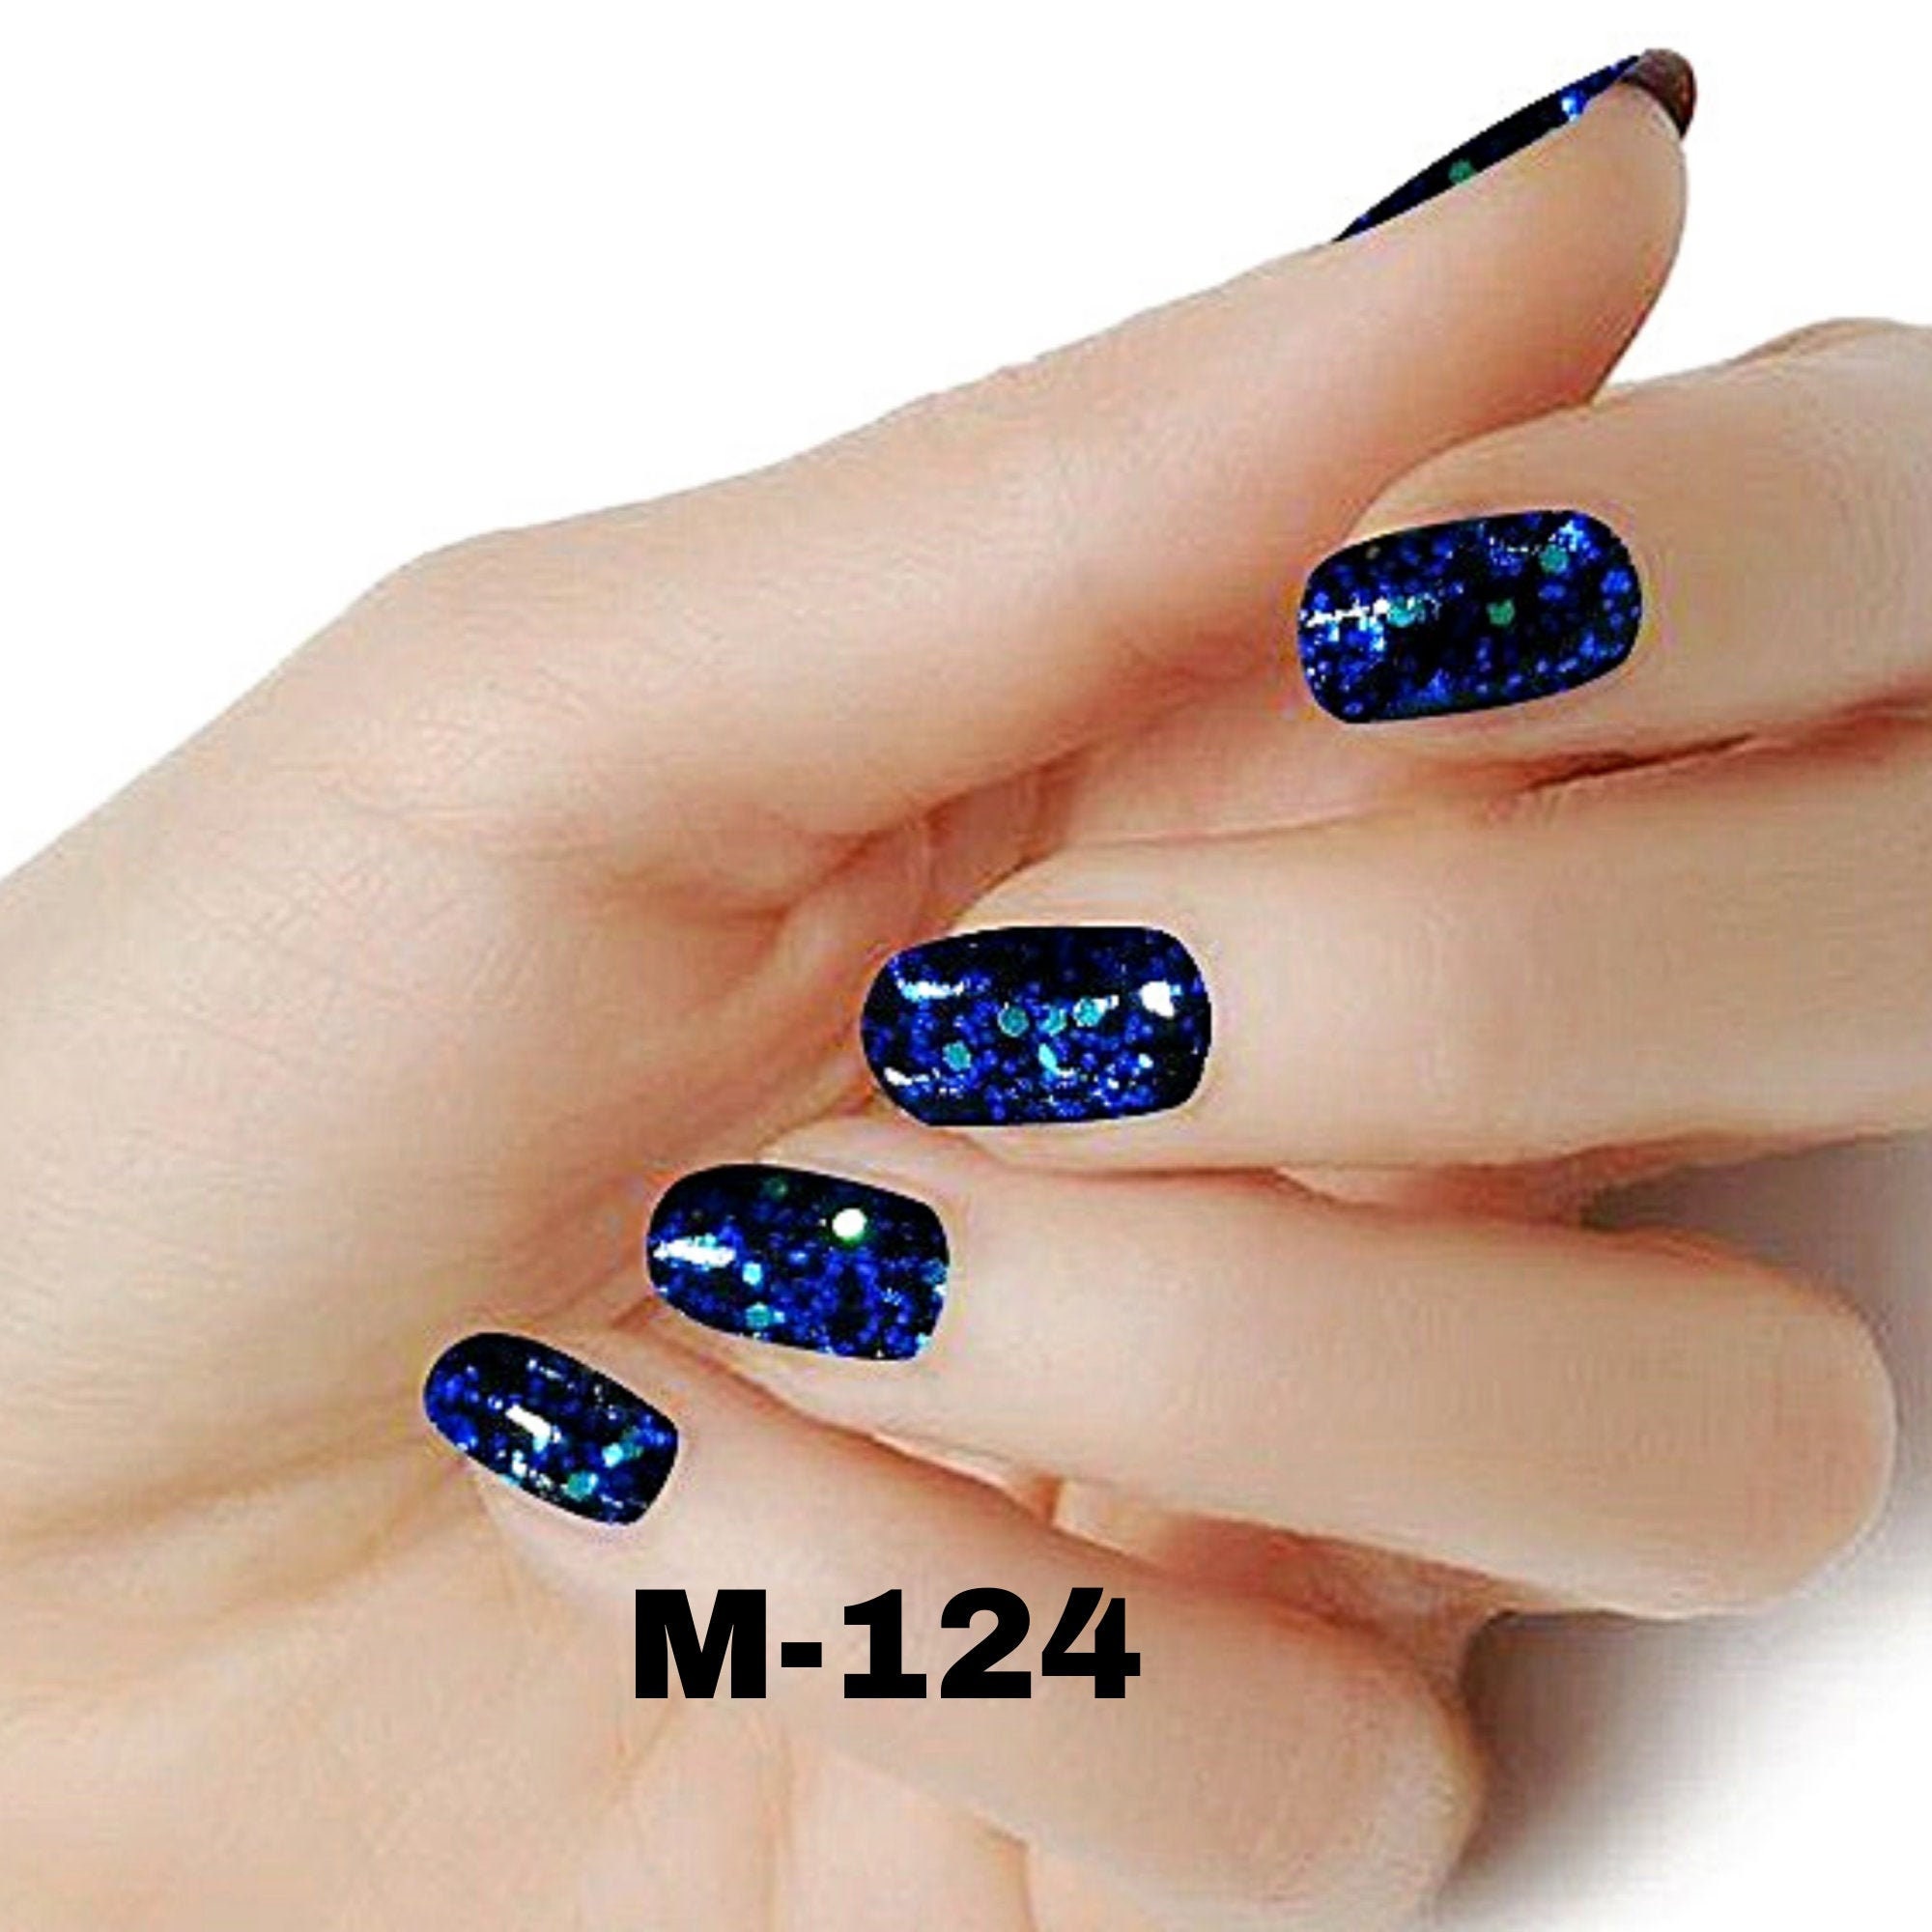 Blue Color Glitter Real Nail Polish Strips M124 Street Art - Etsy